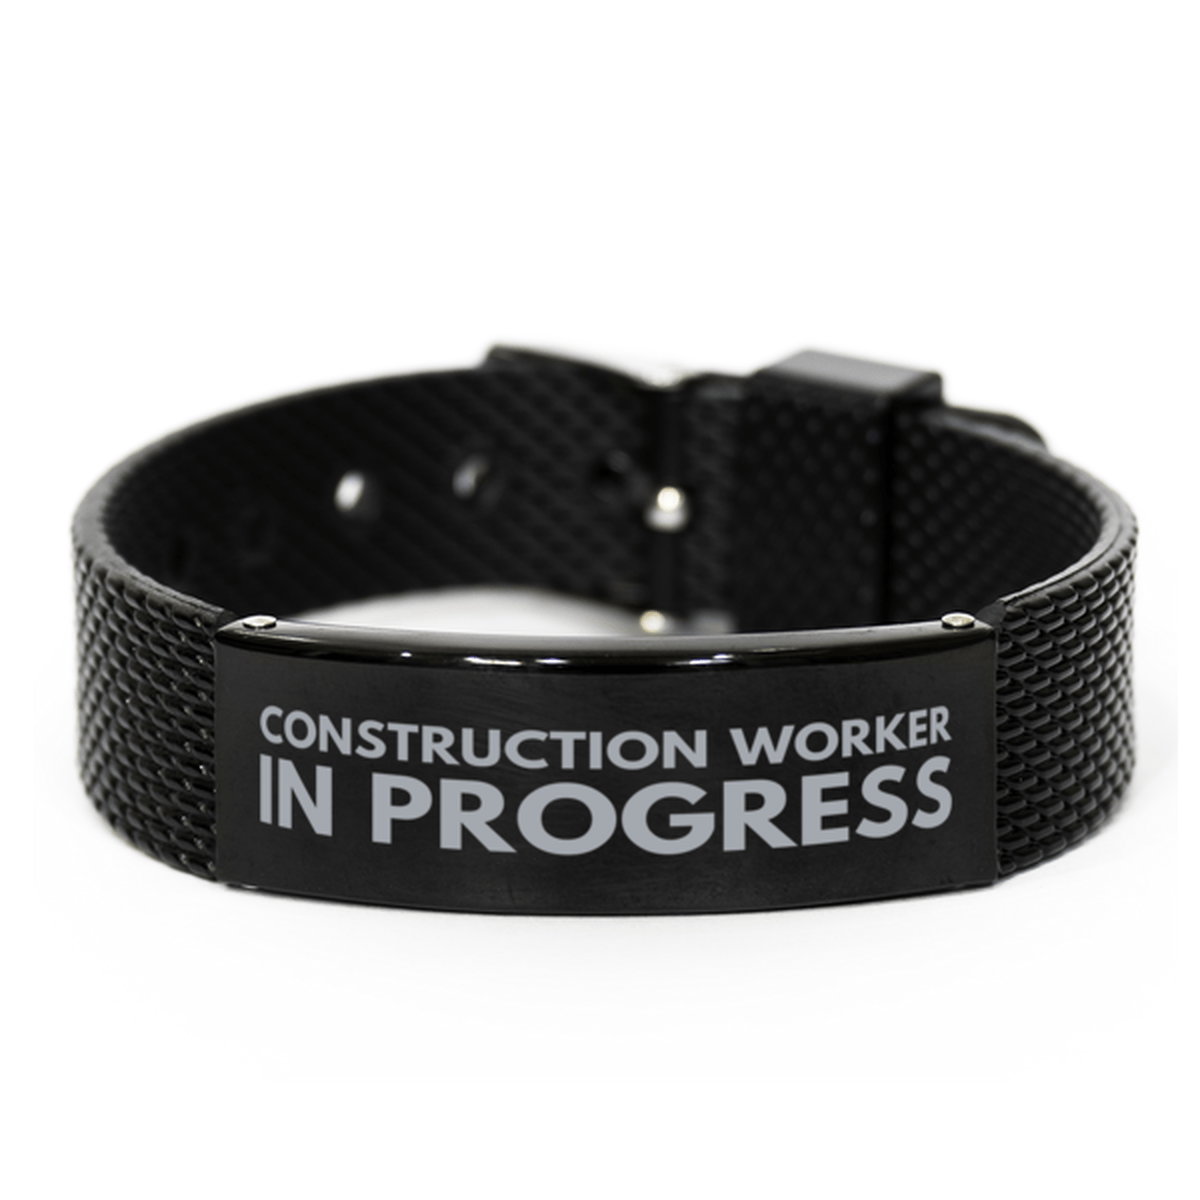 Inspirational Construction Worker Black Shark Mesh Bracelet, Construction Worker In Progress, Best Graduation Gifts for Students